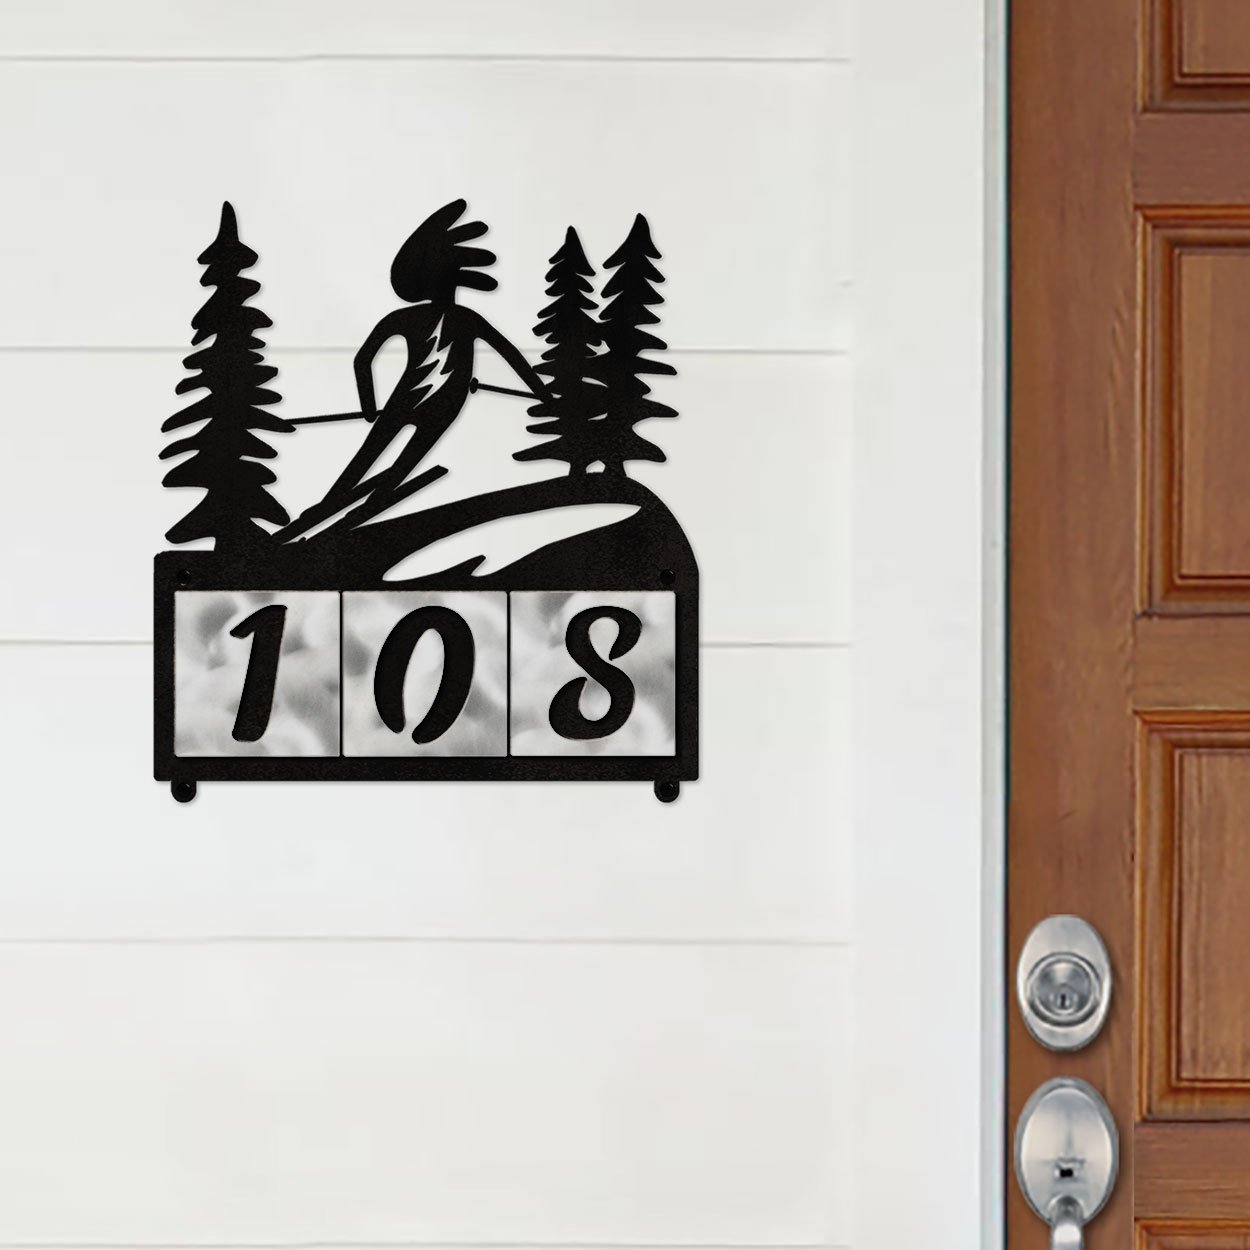 607163 - Kokopelli Alpine Skier Design 3-Digit Horizontal 4-inch Tile Outdoor House Numbers